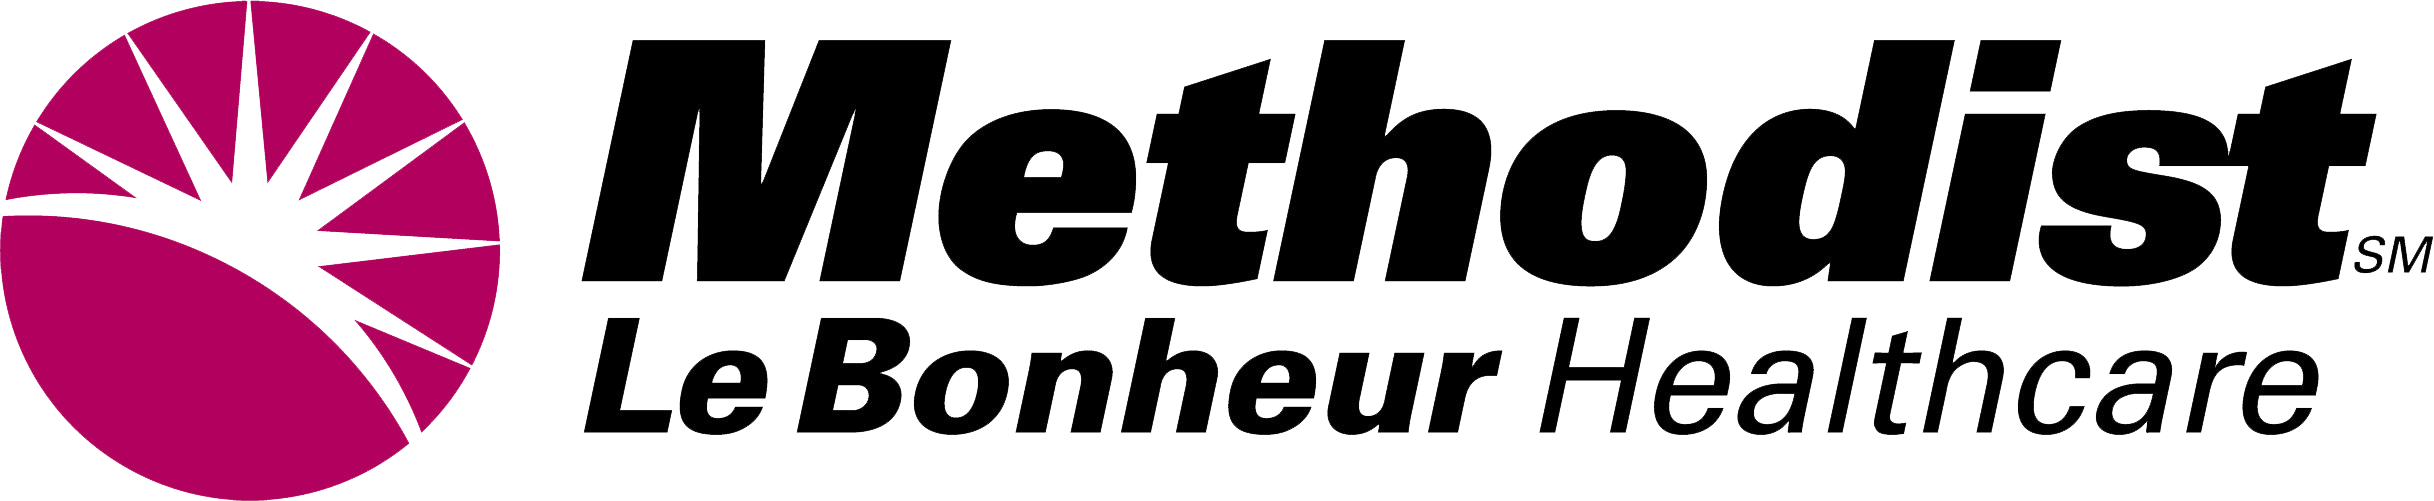 Methodist_Healthcare_Logo.png